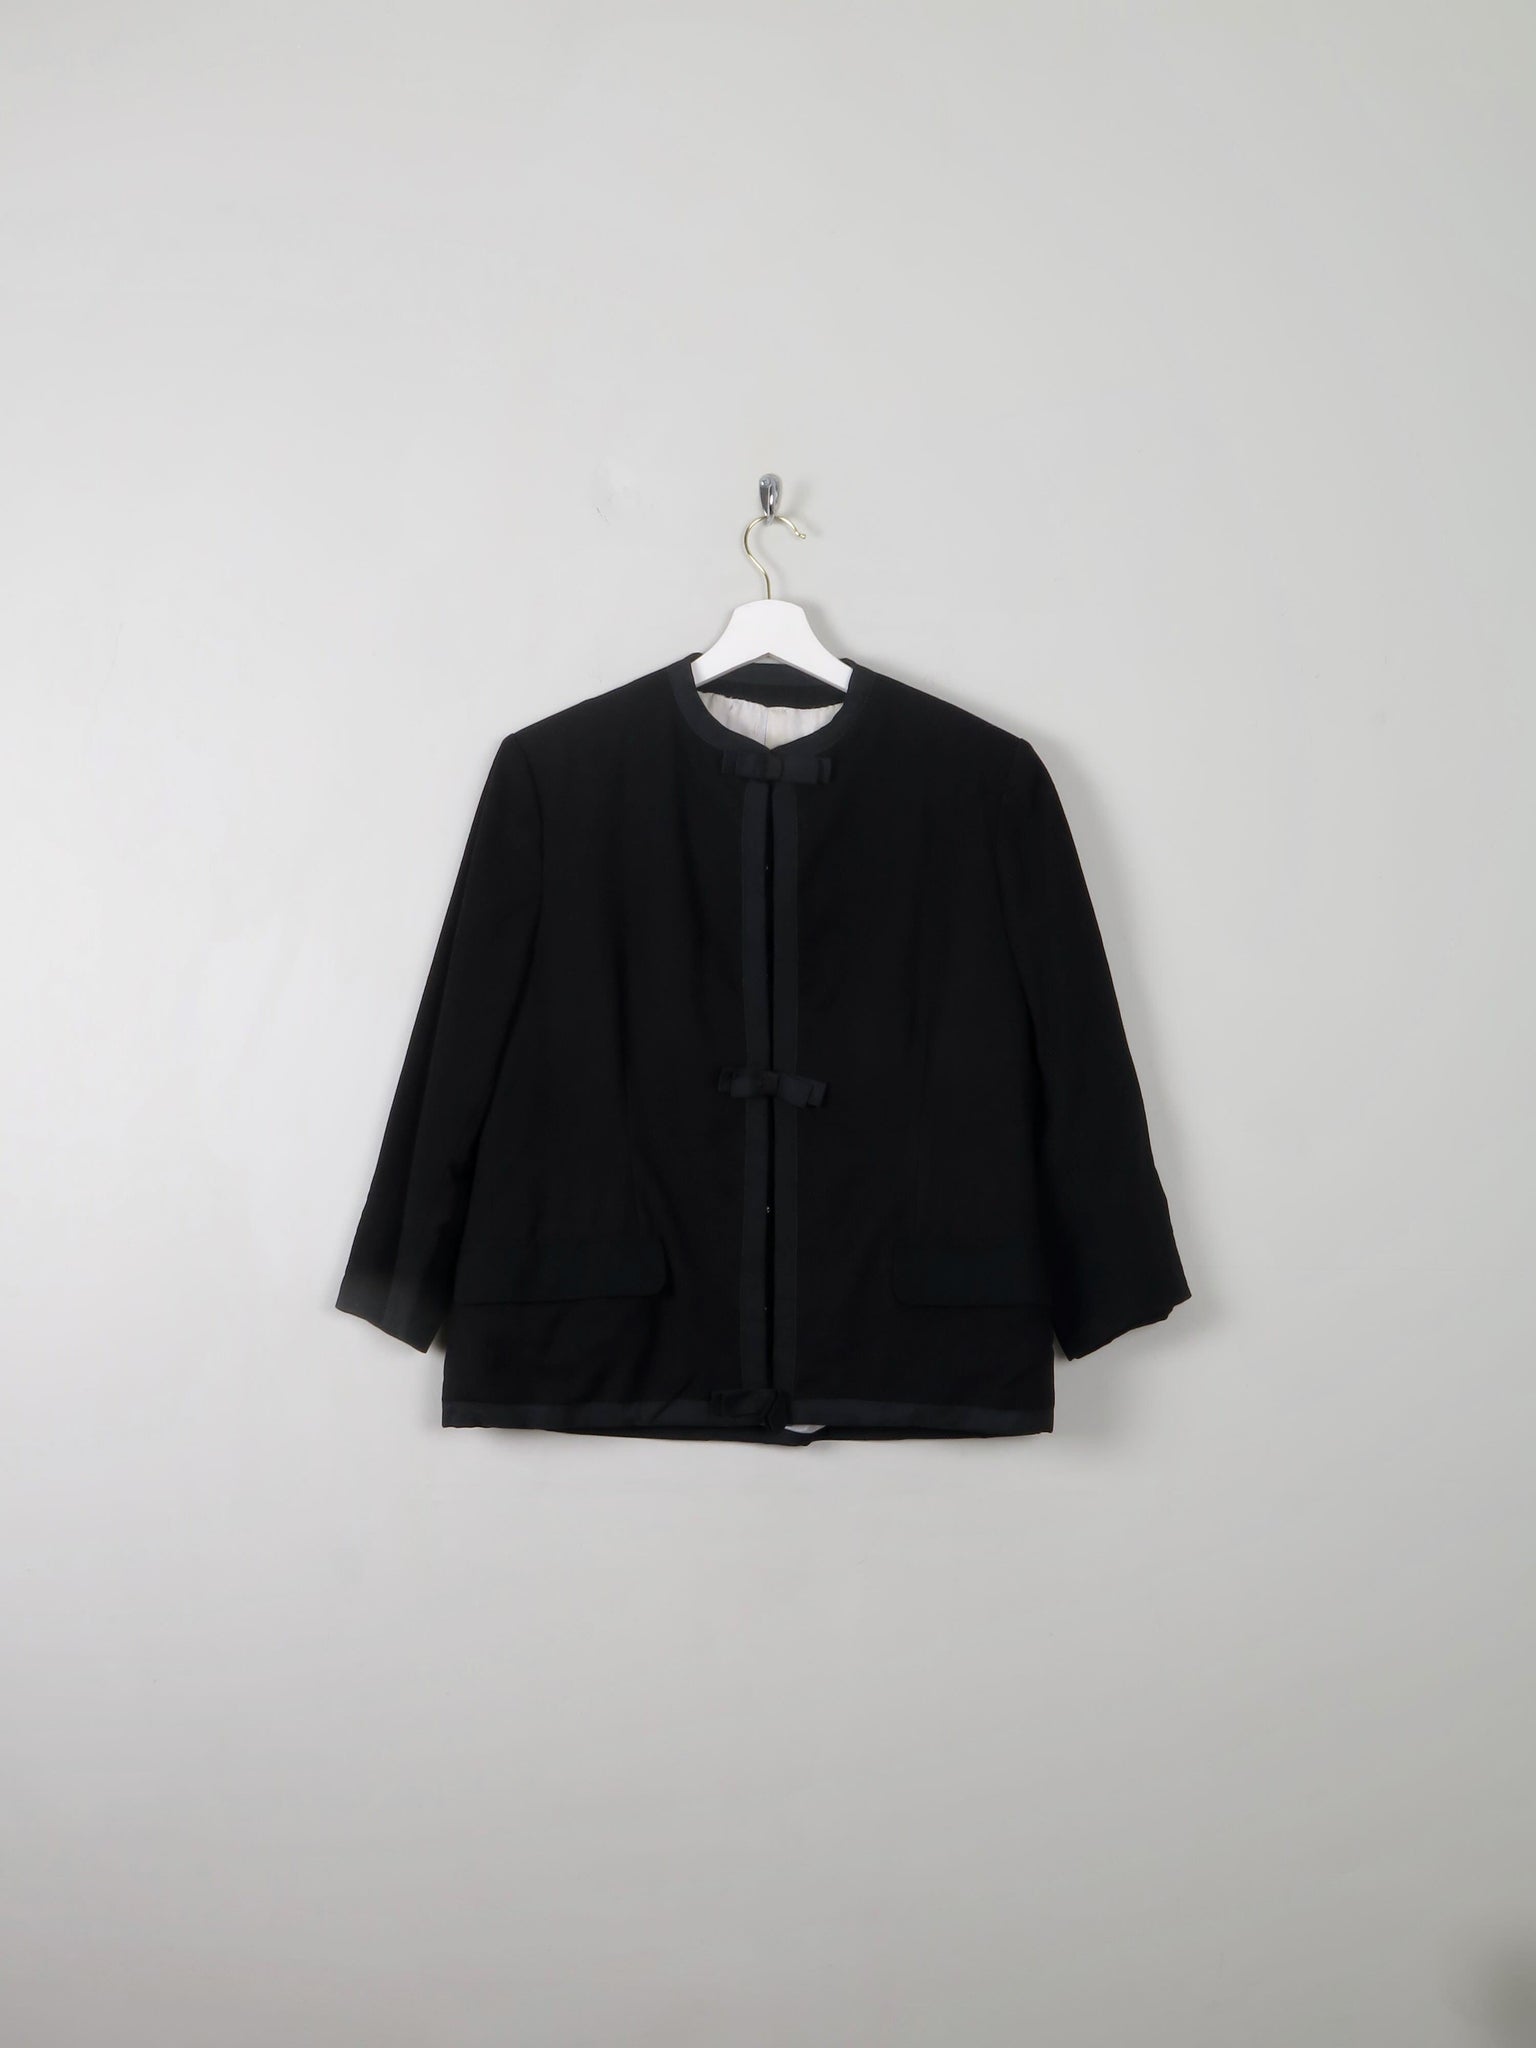 Vintage 1950s Black Wool Jacket S - The Harlequin